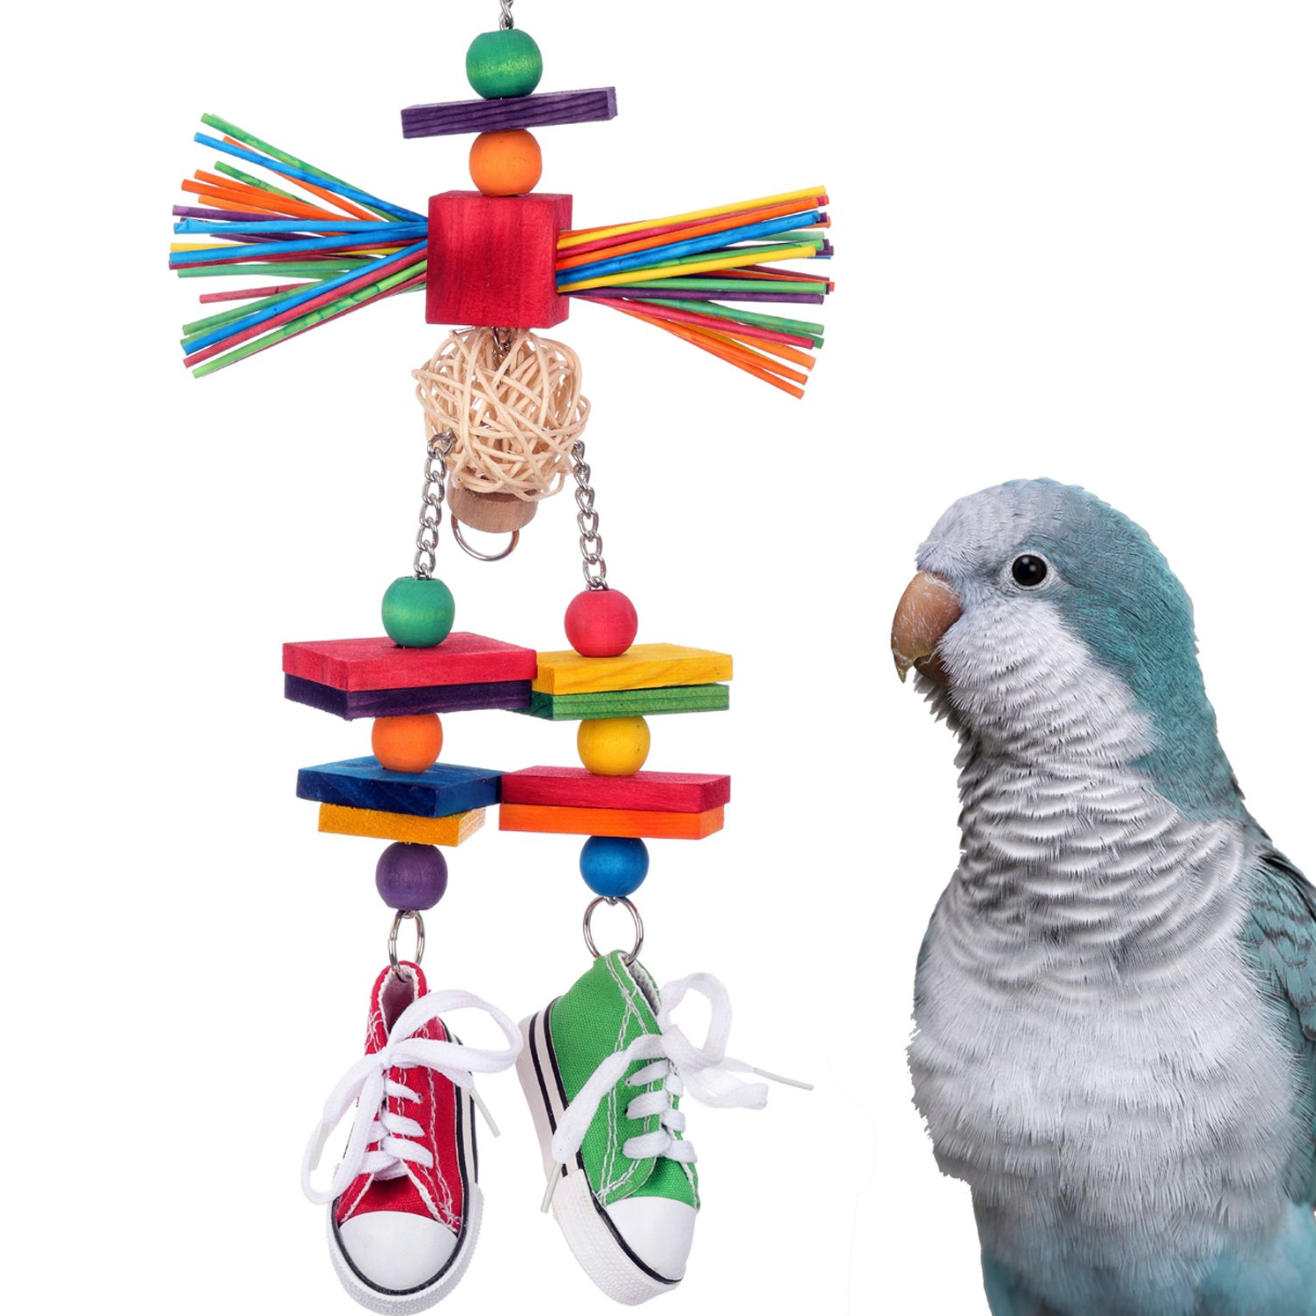 Medium Bird Toys